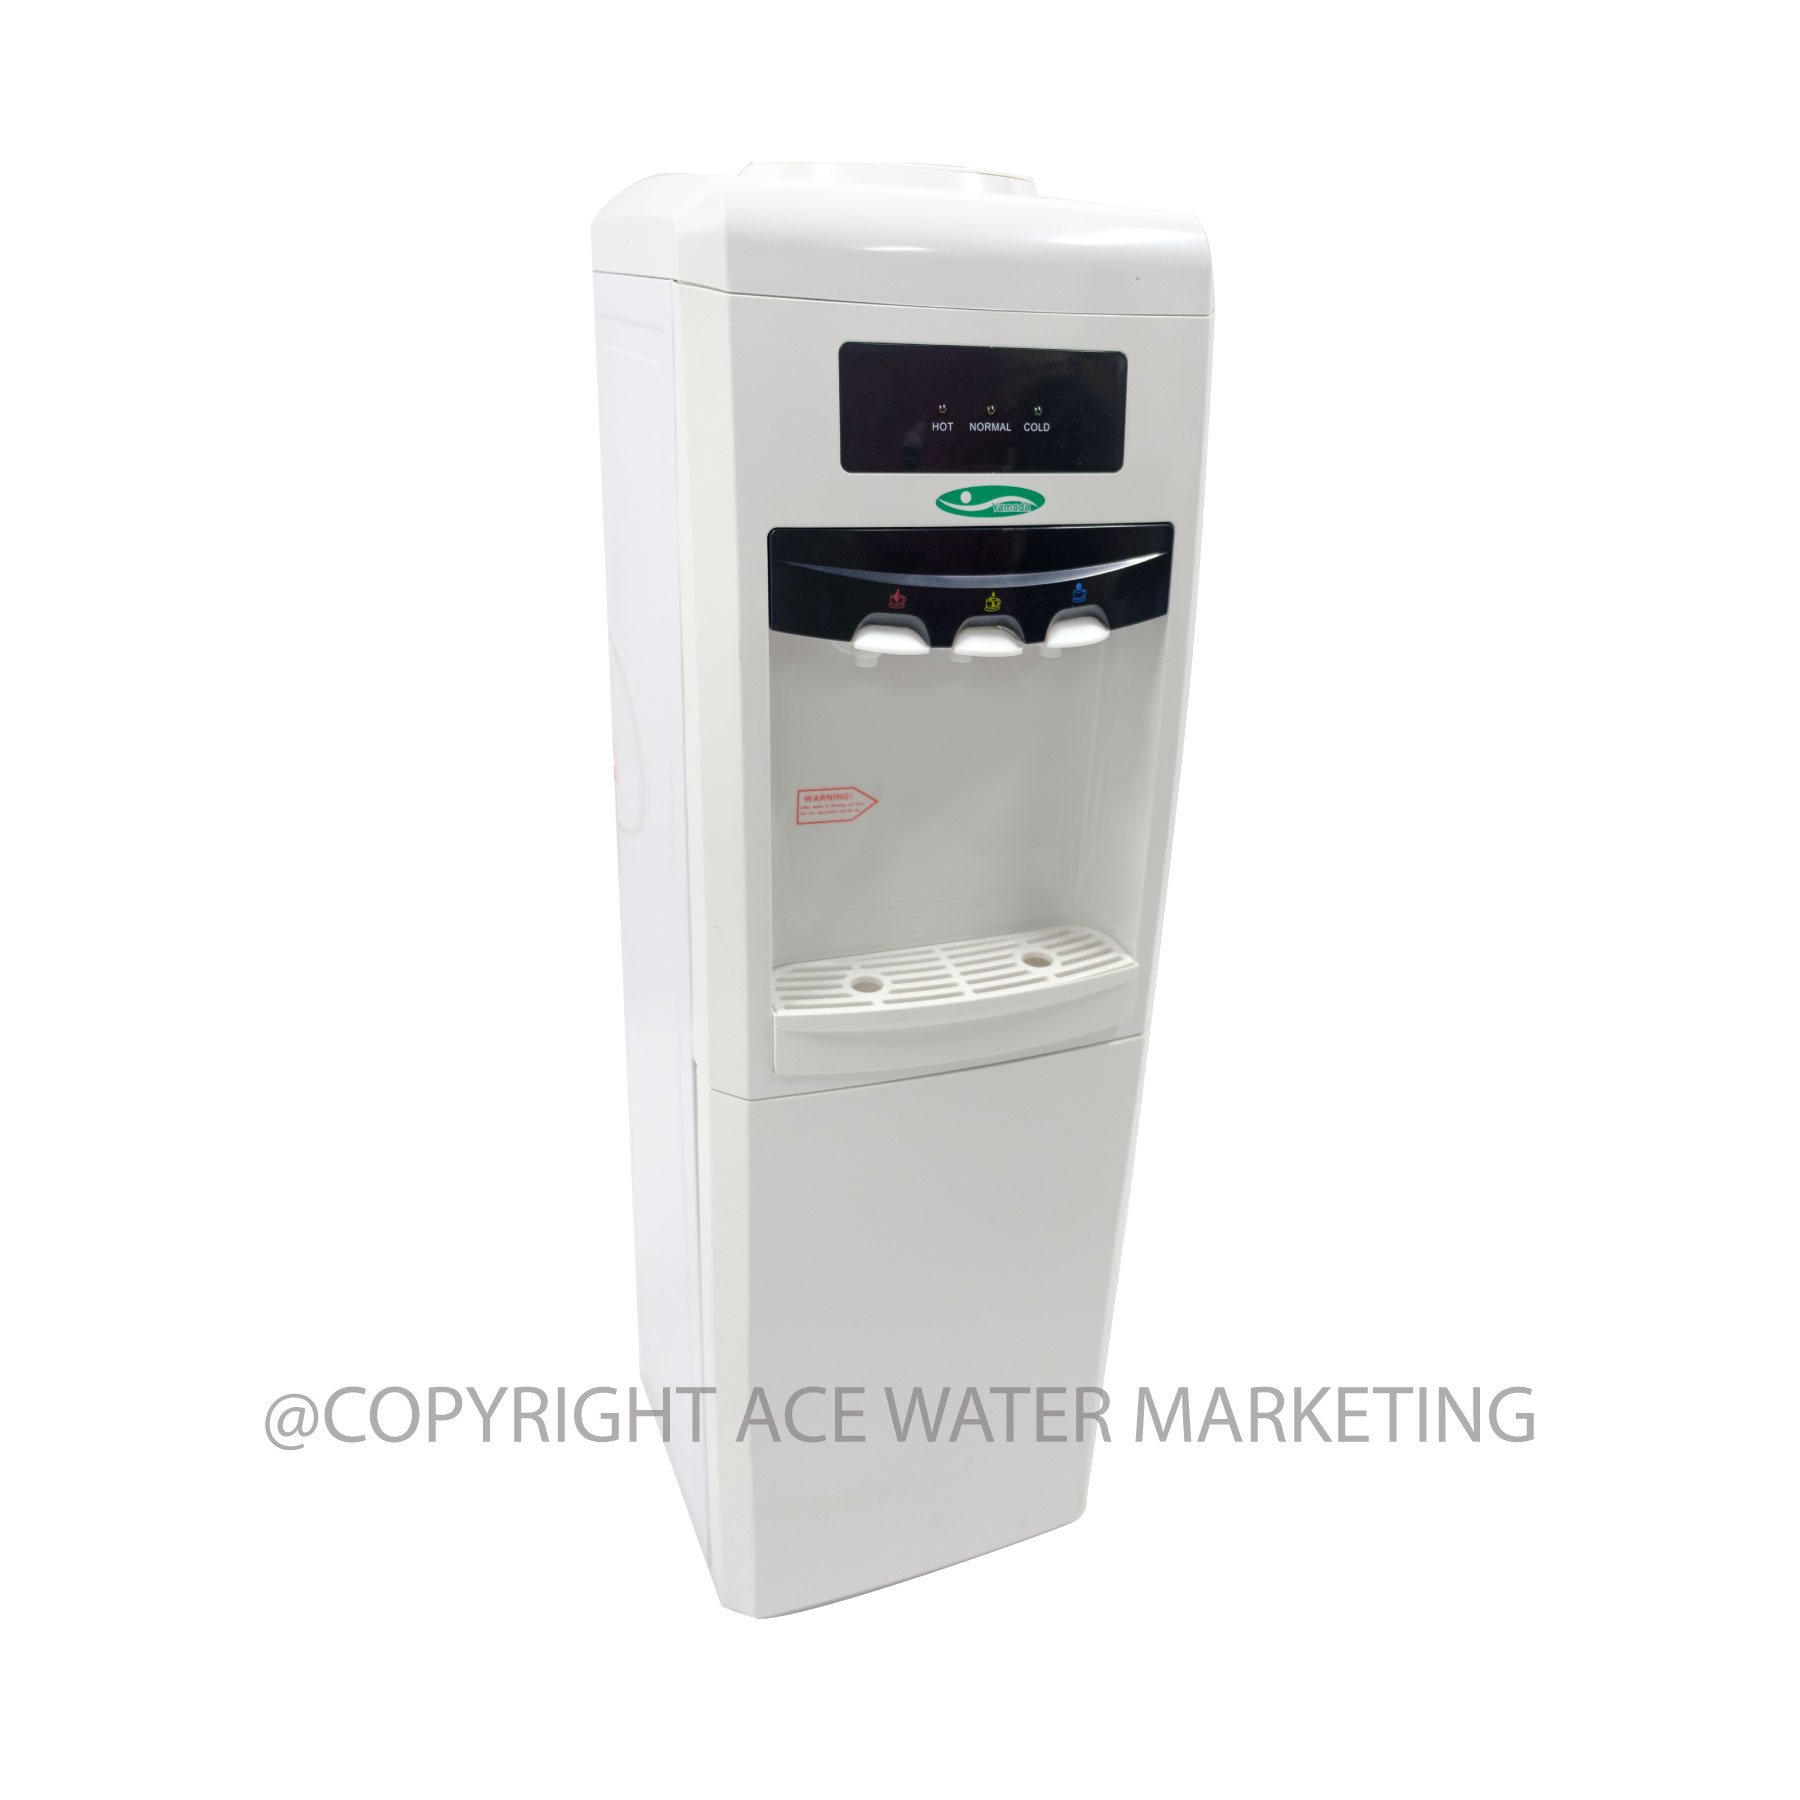 https://acewater.my/wp-content/uploads/2019/08/Yamada-Floor-Standing-Hot-Cold-warm-Water-Dispenser-IL688-12C.jpg